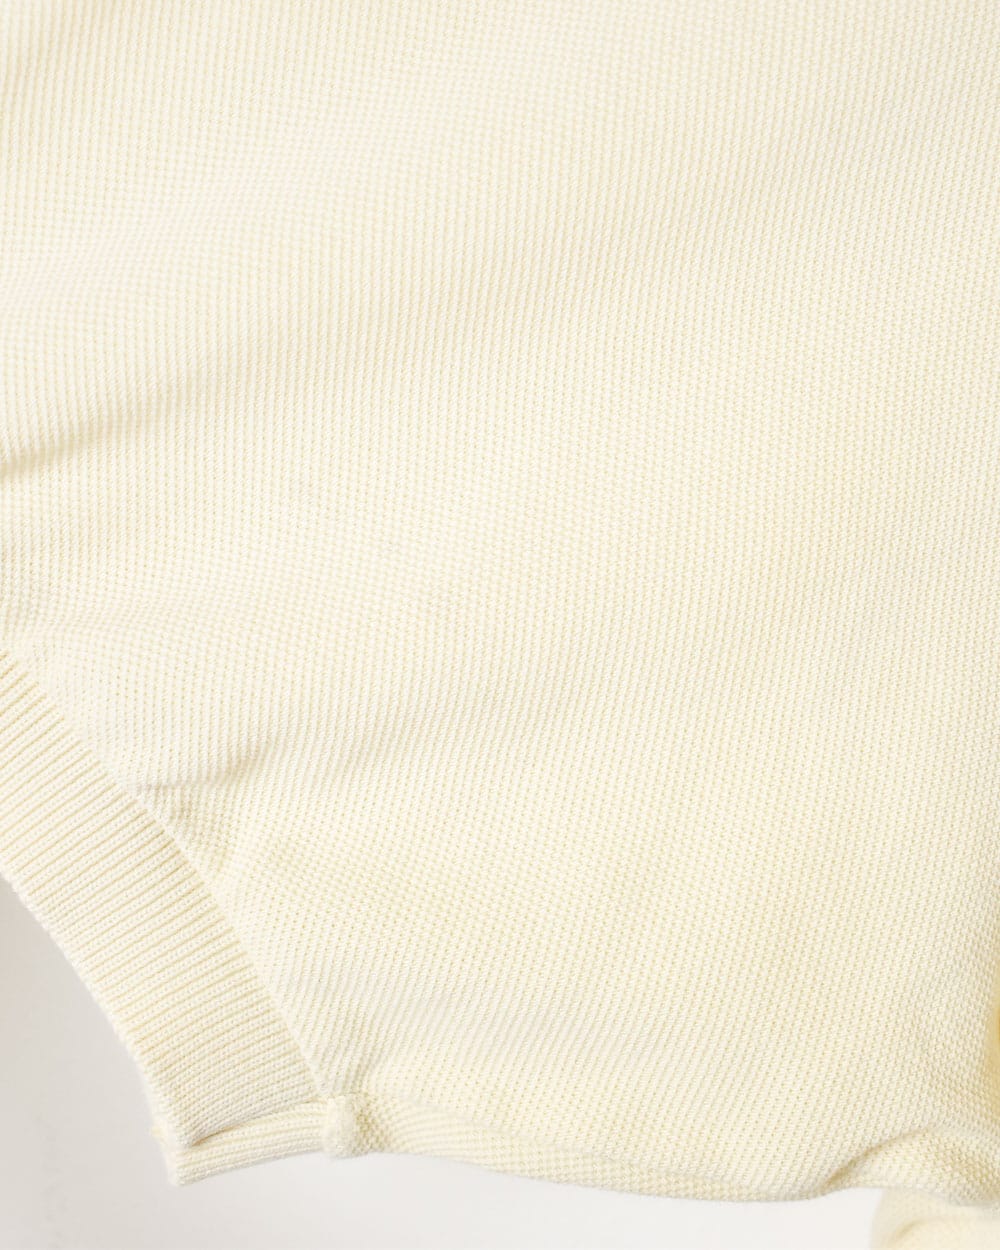 Yellow Chemise Lacoste Polo Shirt - Medium